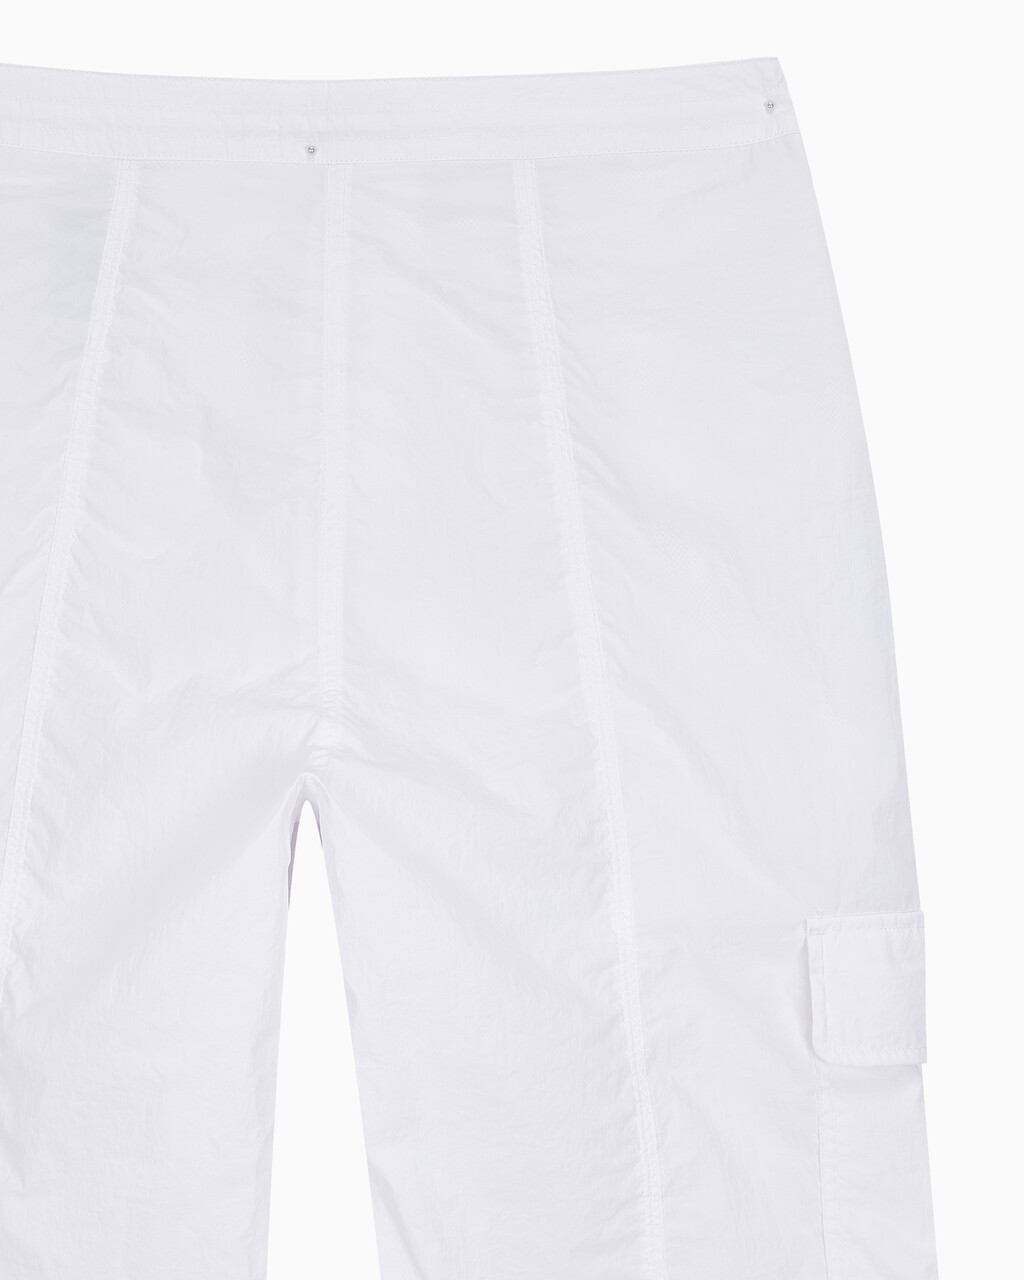 Buy 여성 소프트터치 화이트 카고 팬츠 in color BRIGHT WHITE